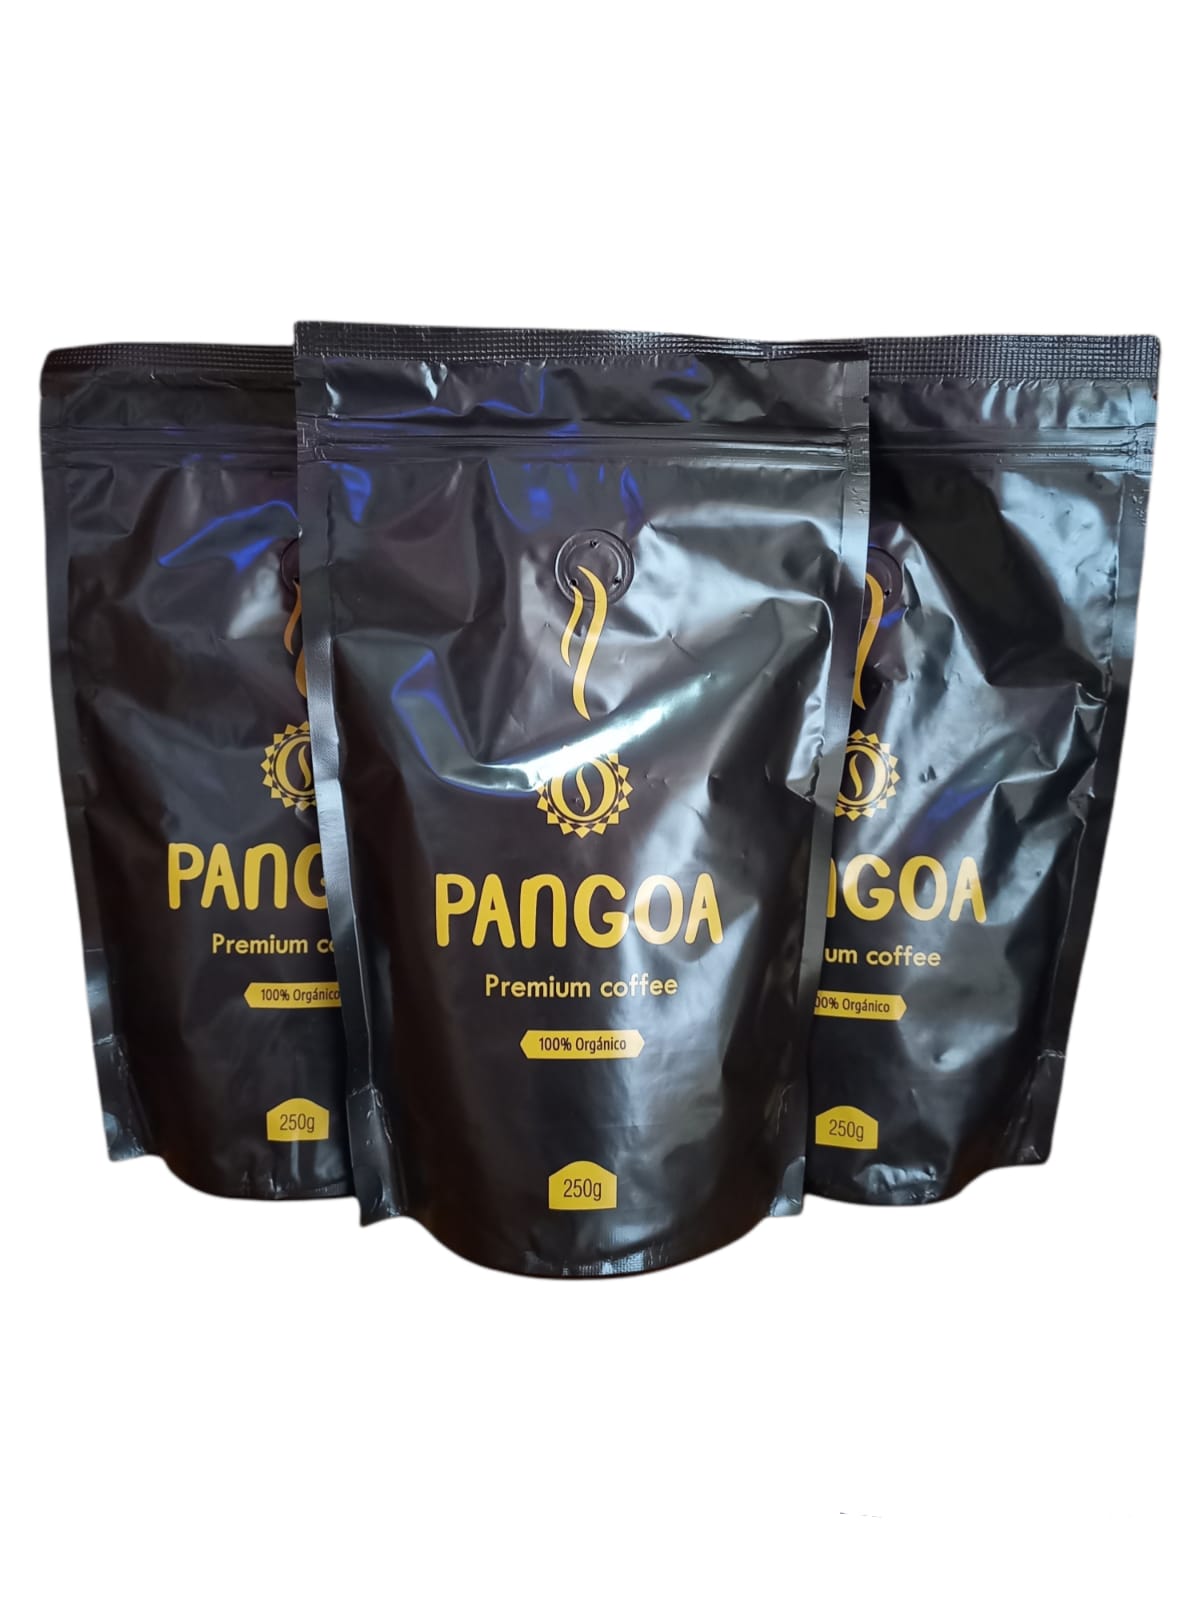 Producto RelacionadoPangoa Premium Coffe 250g